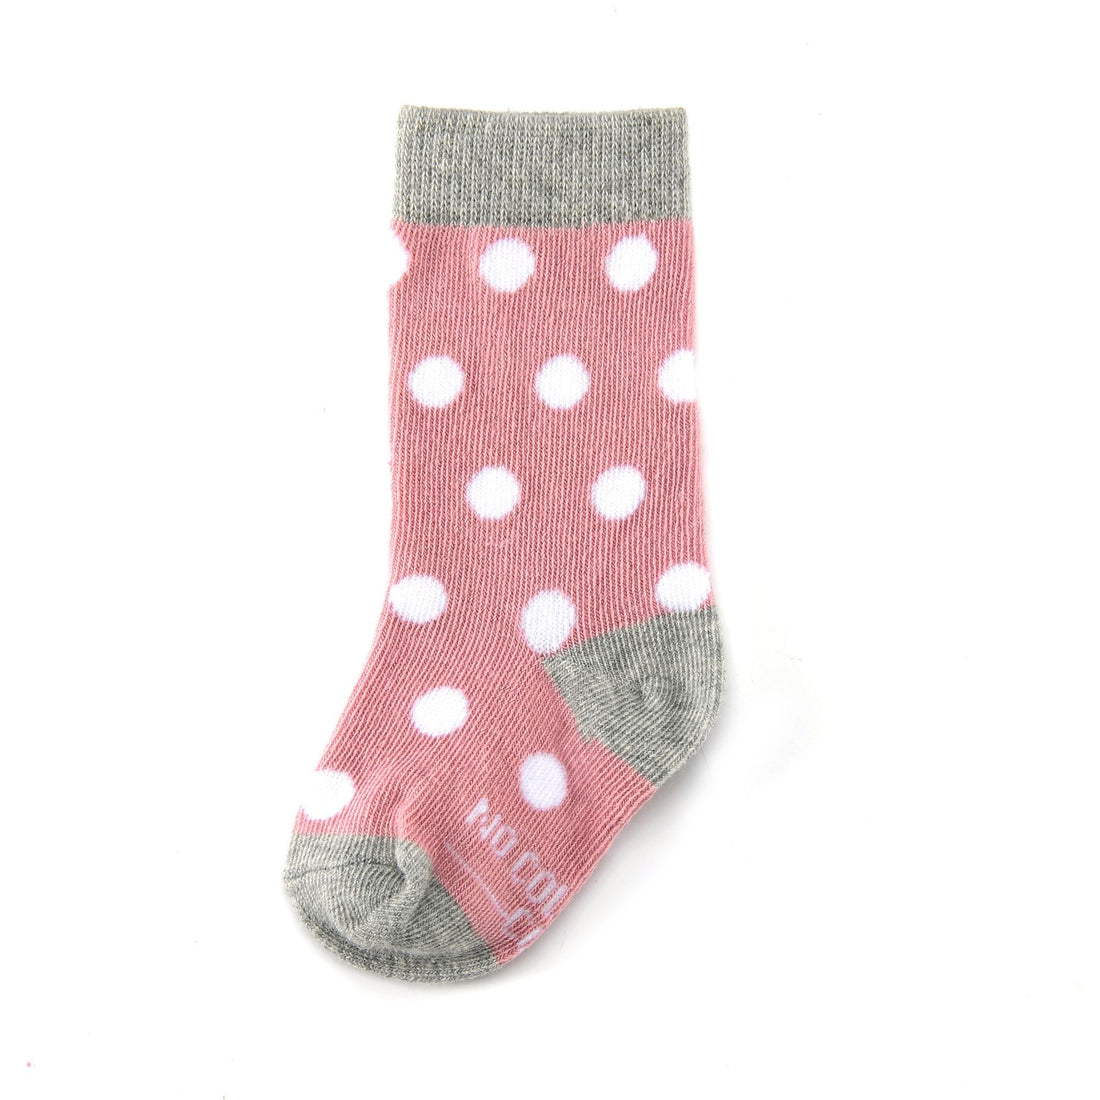 Pink Socks – No Cold Feet